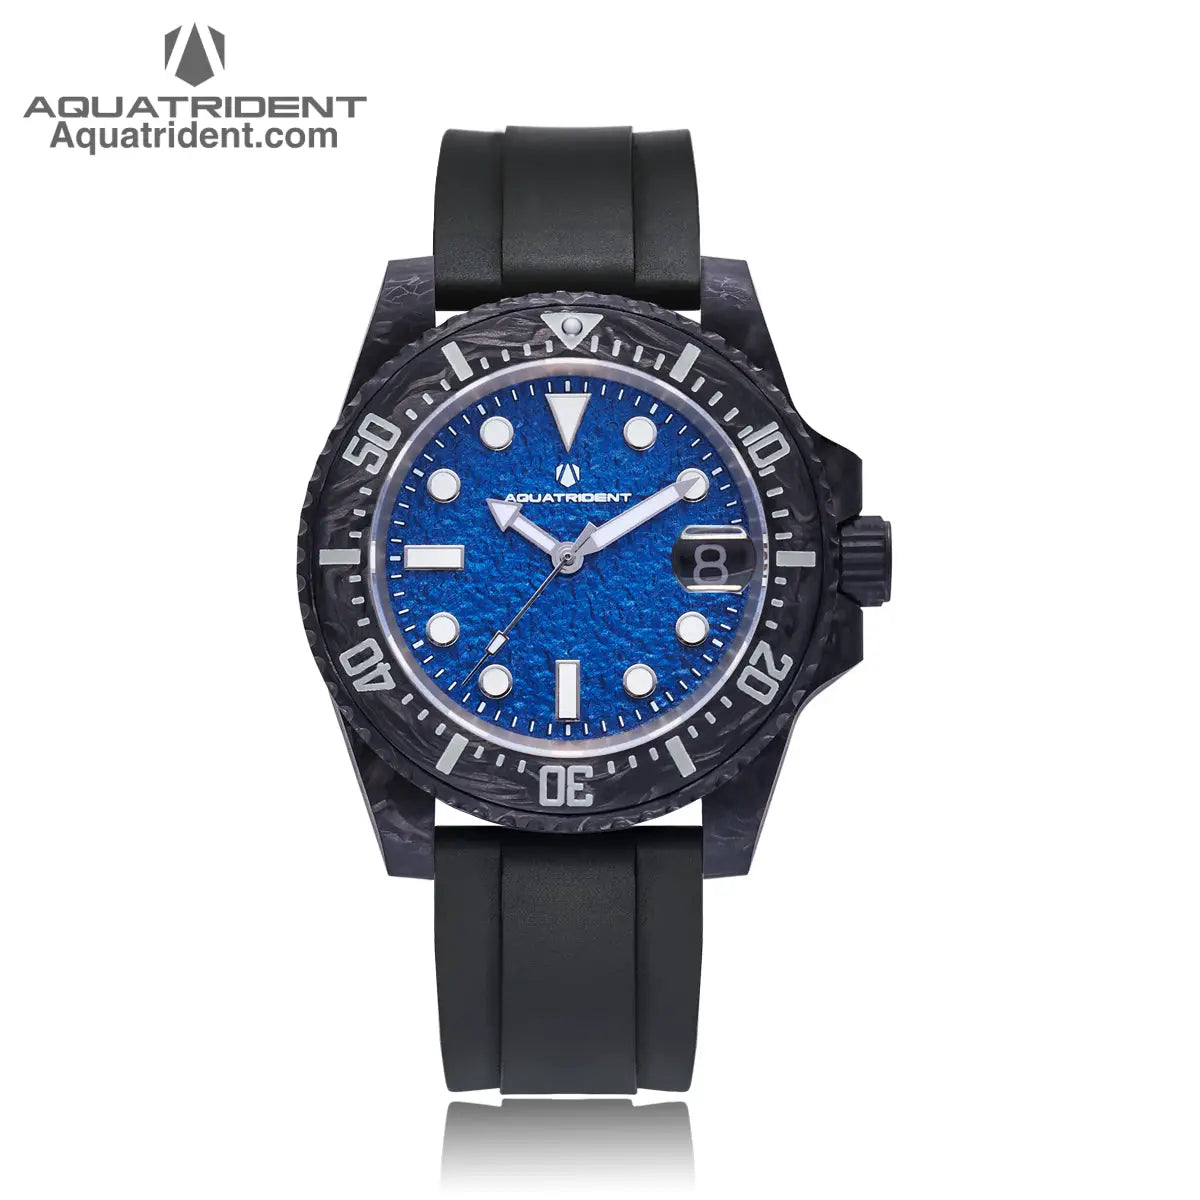 black carbon fiber case and bezel-Blue rough textured dial with dates-balck fluororubber strap-watch